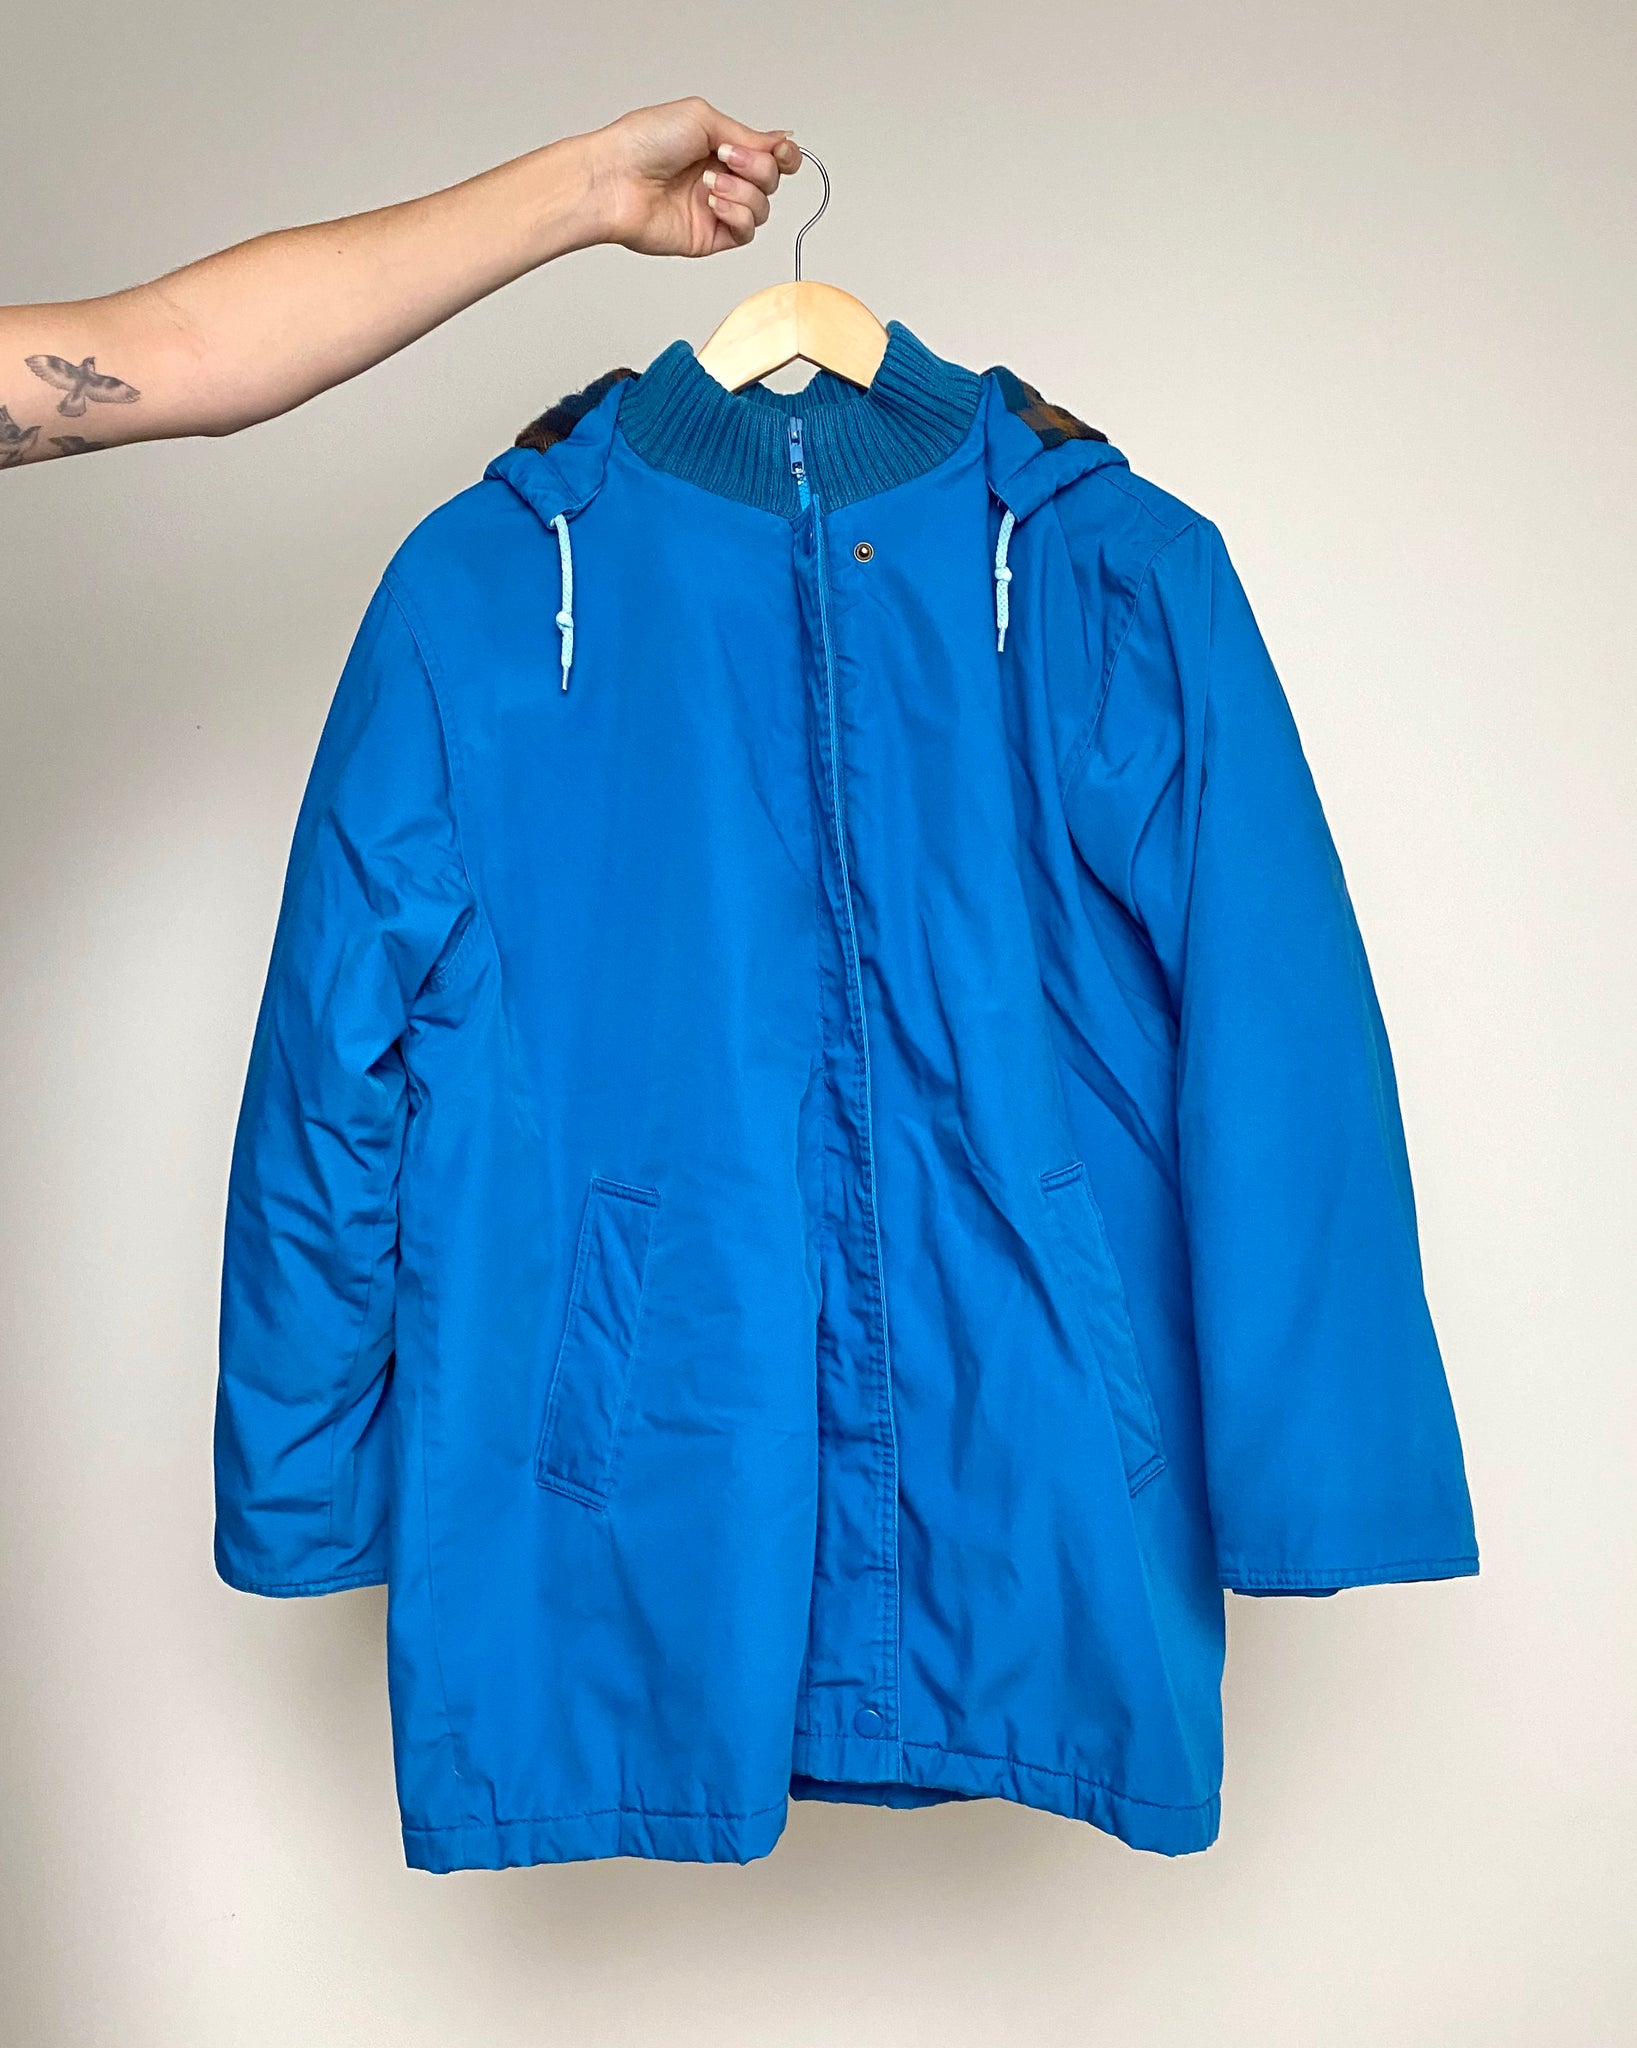 Plaid lined Hood Jacket (size M)